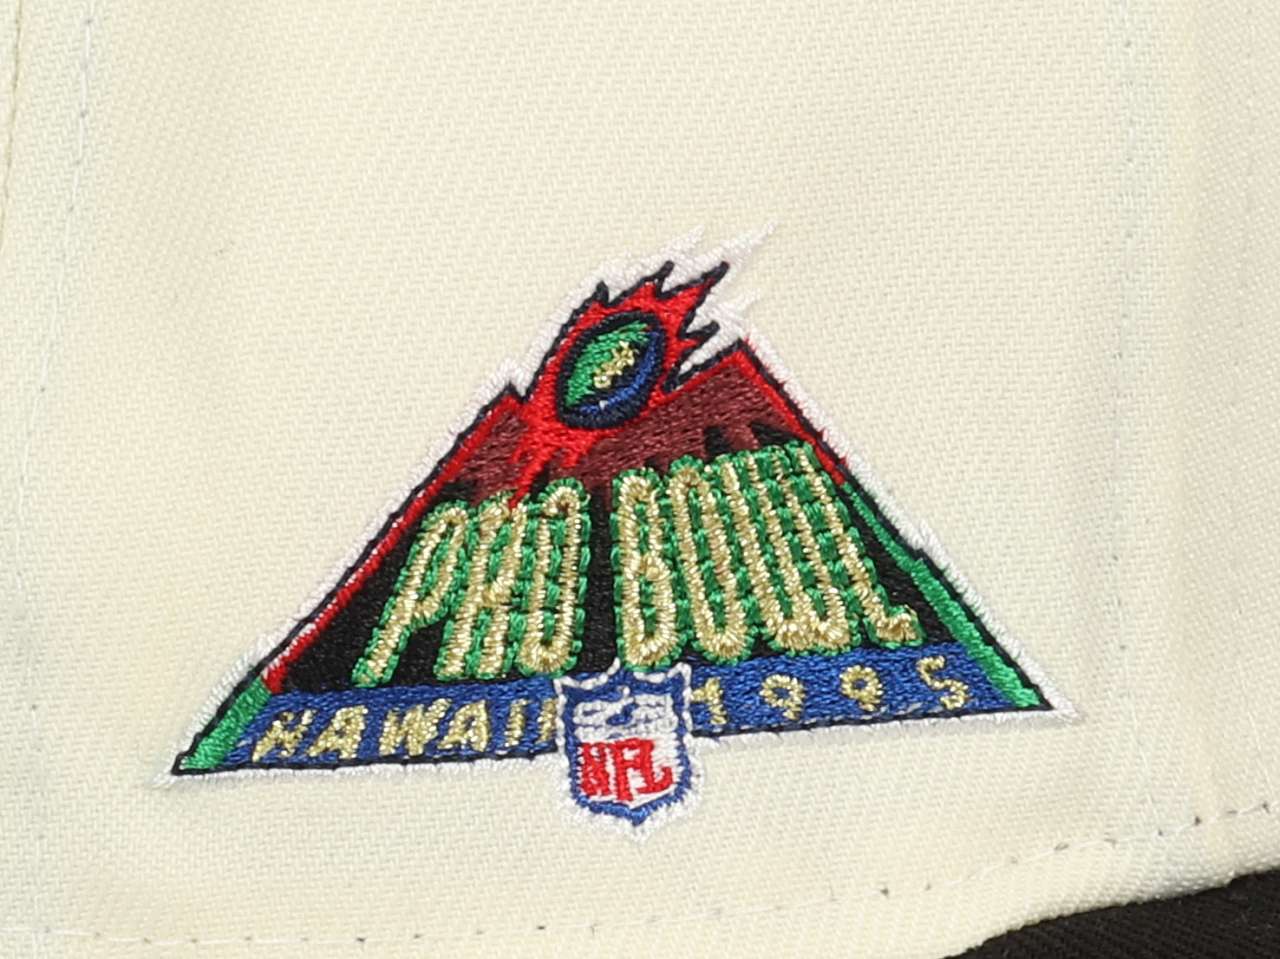 Las Vegas Raiders NFL Pro Bowl 1995 Sidepatch Chrome 9Fifty Snapback Cap New Era